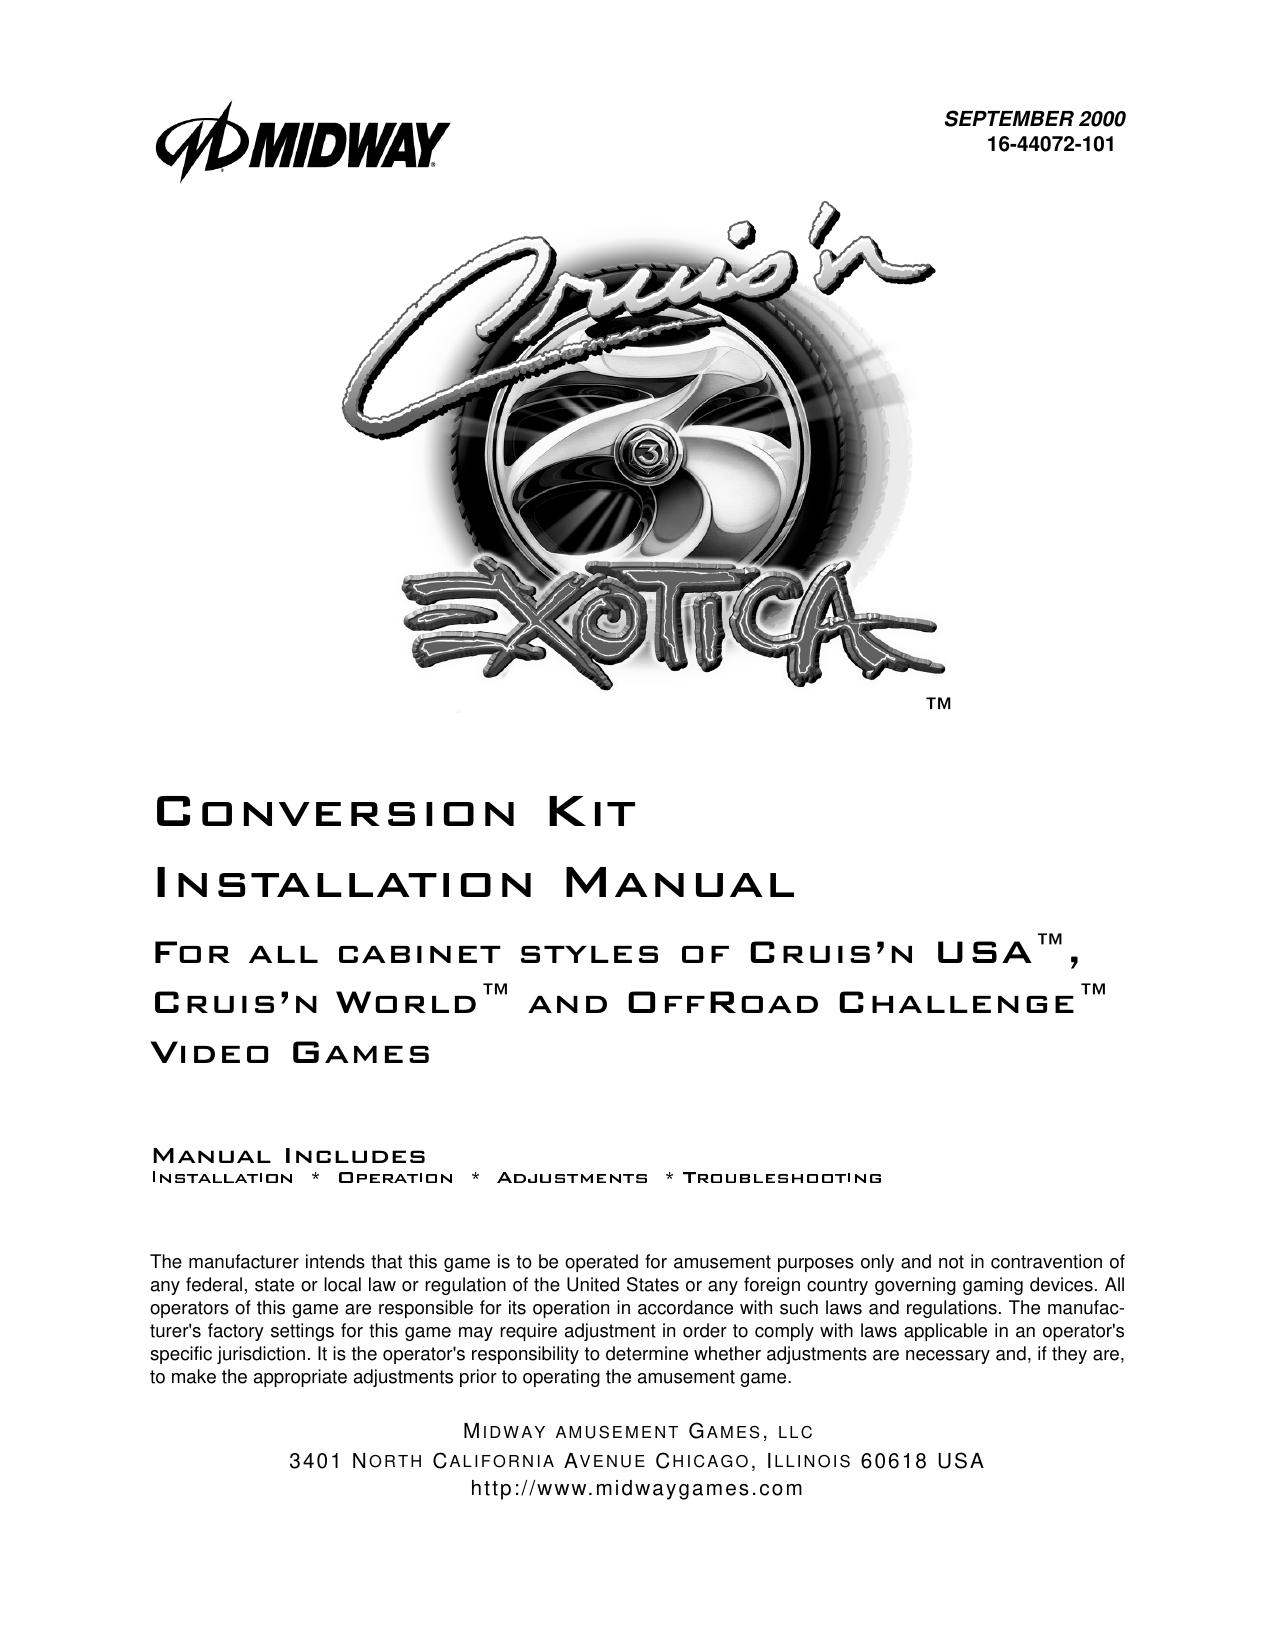 Cruisn Exotica Conversion Kit